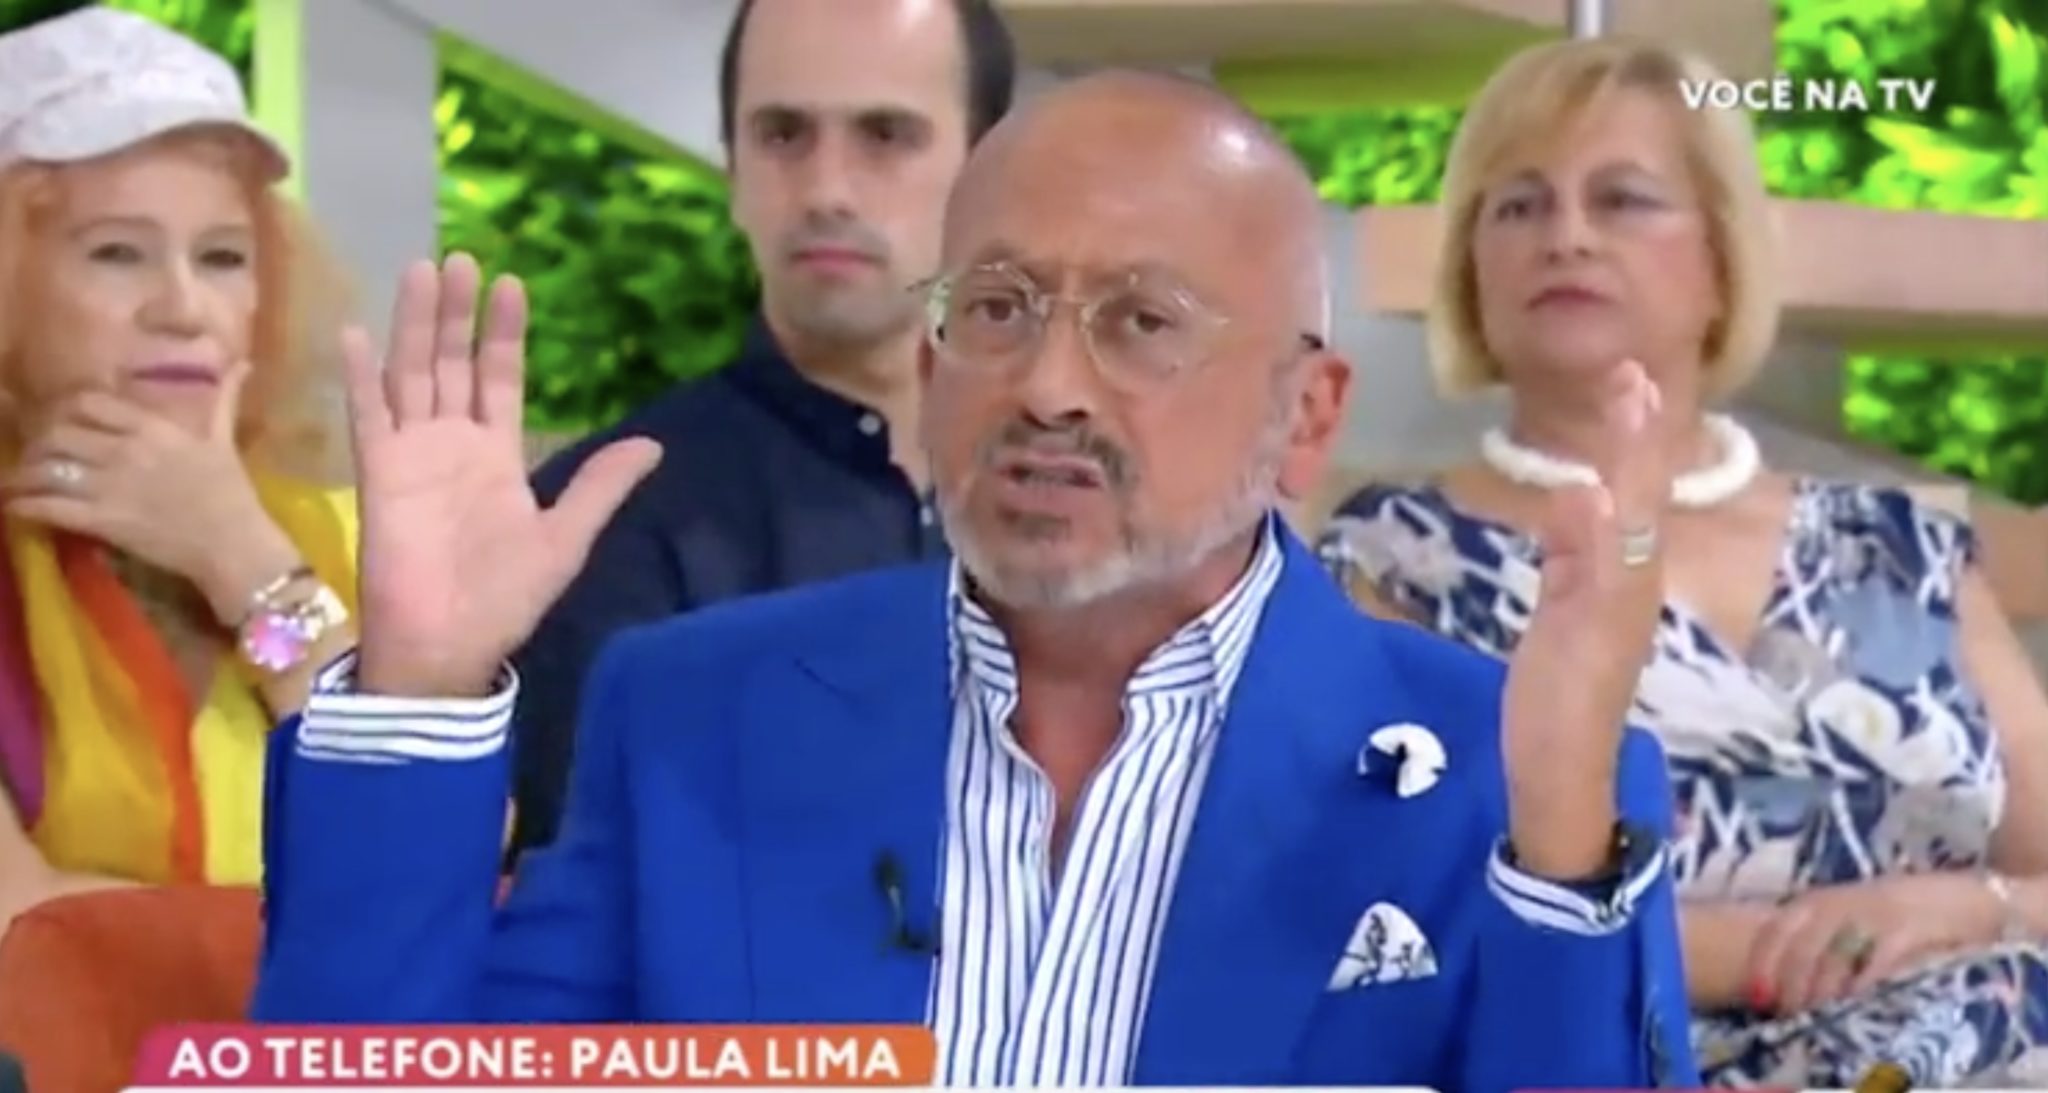 Manuel Luis Goucha Voce Na Tv Goucha Esclarece Mentira Dita Sobre Ele Nas Redes Sociais